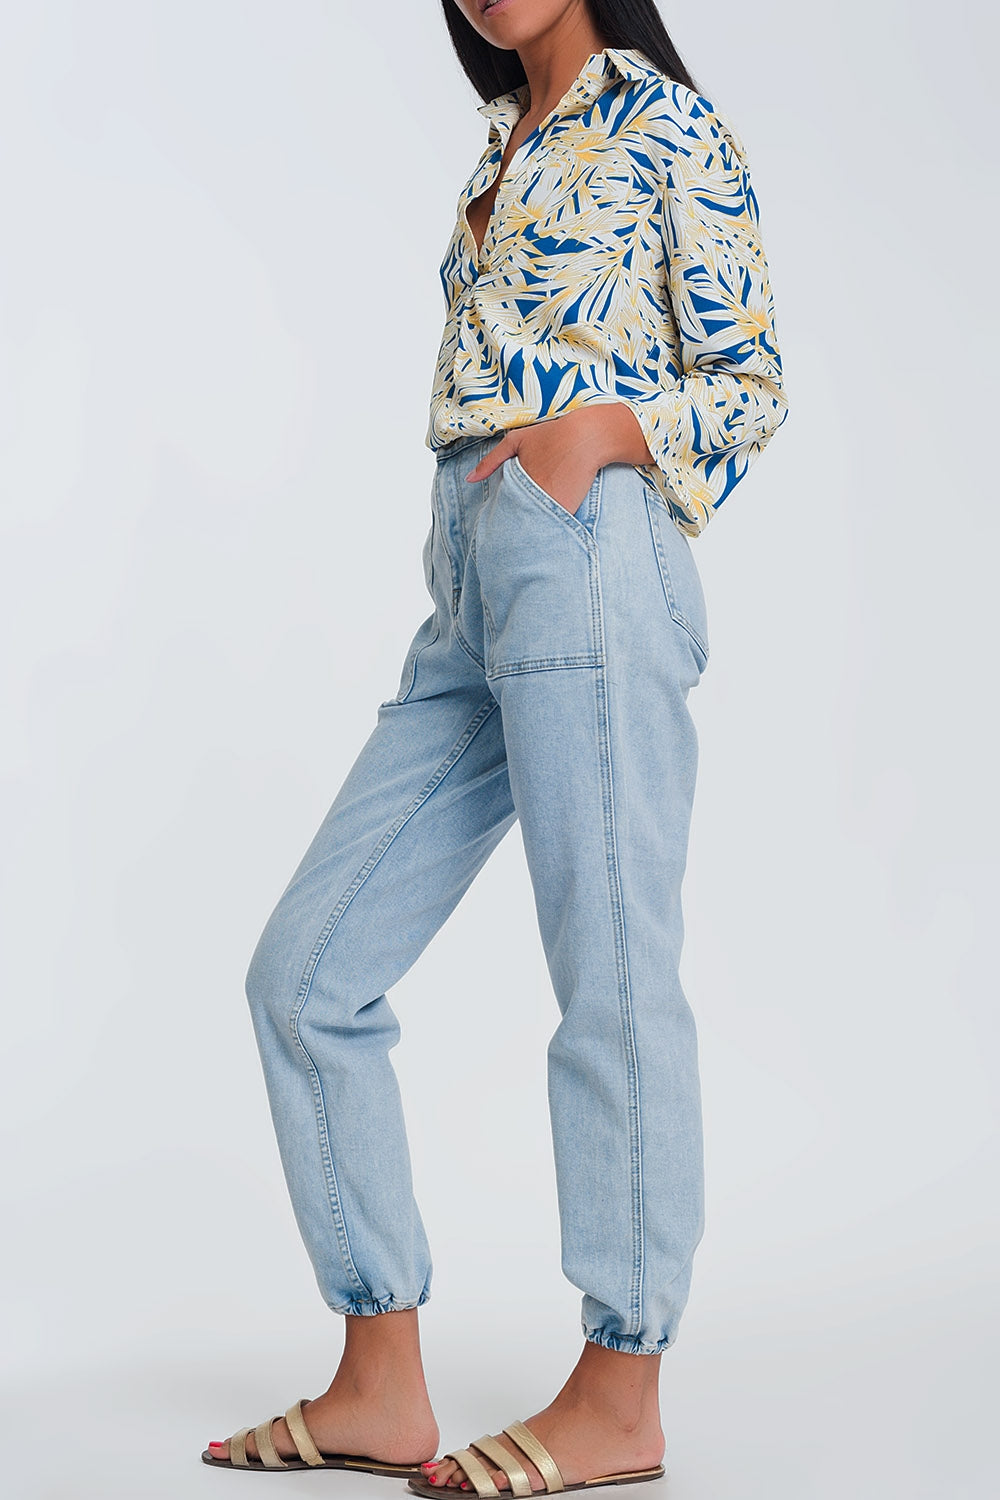 Pocket detail jeans in light denimJeans